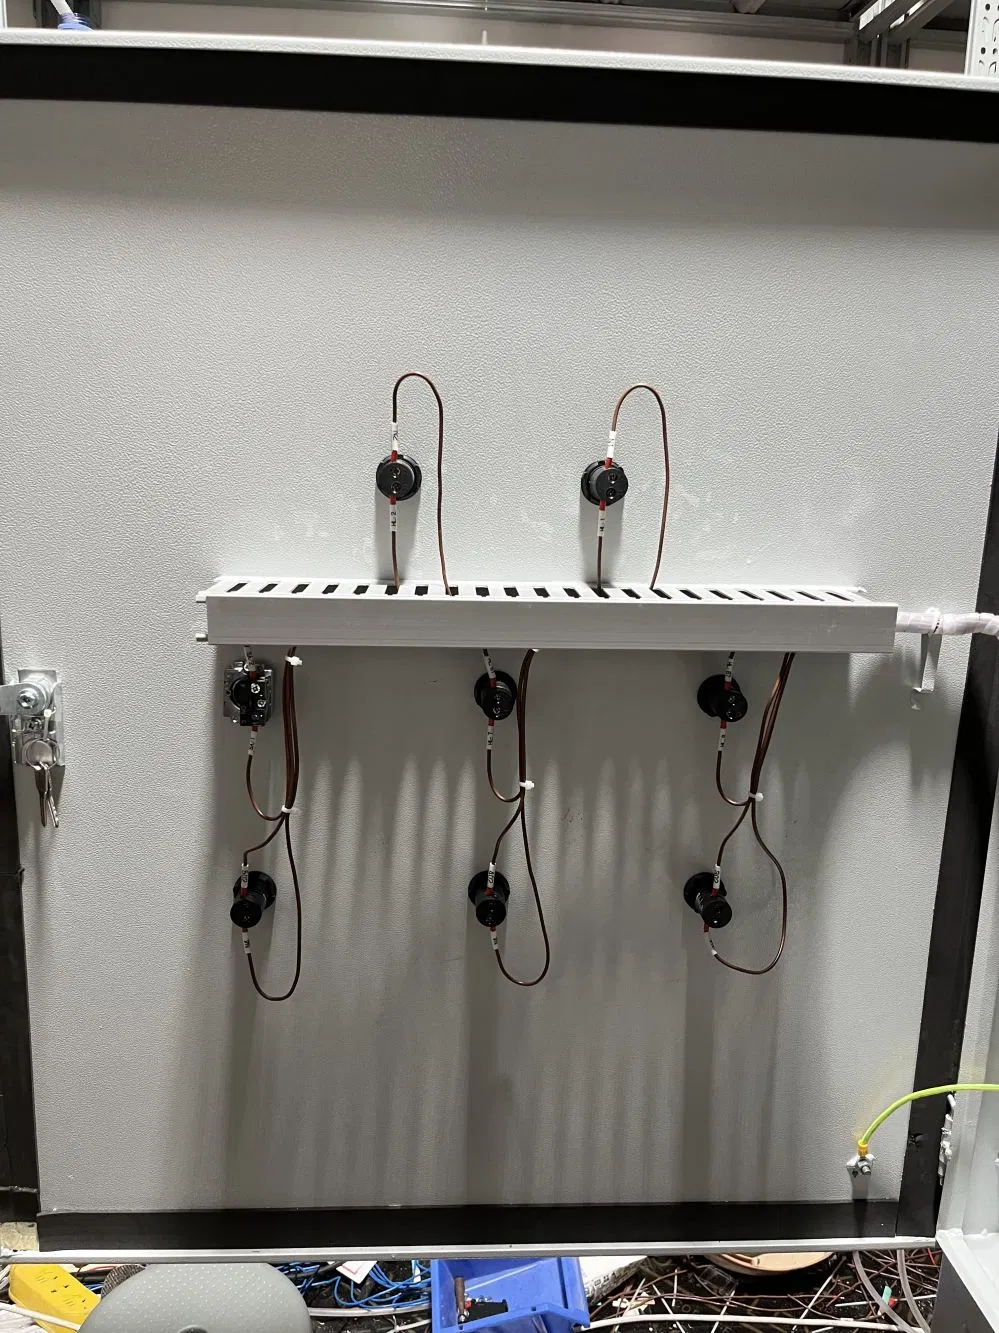 Smart Lighting Control System Power Distribution Panel Control Box